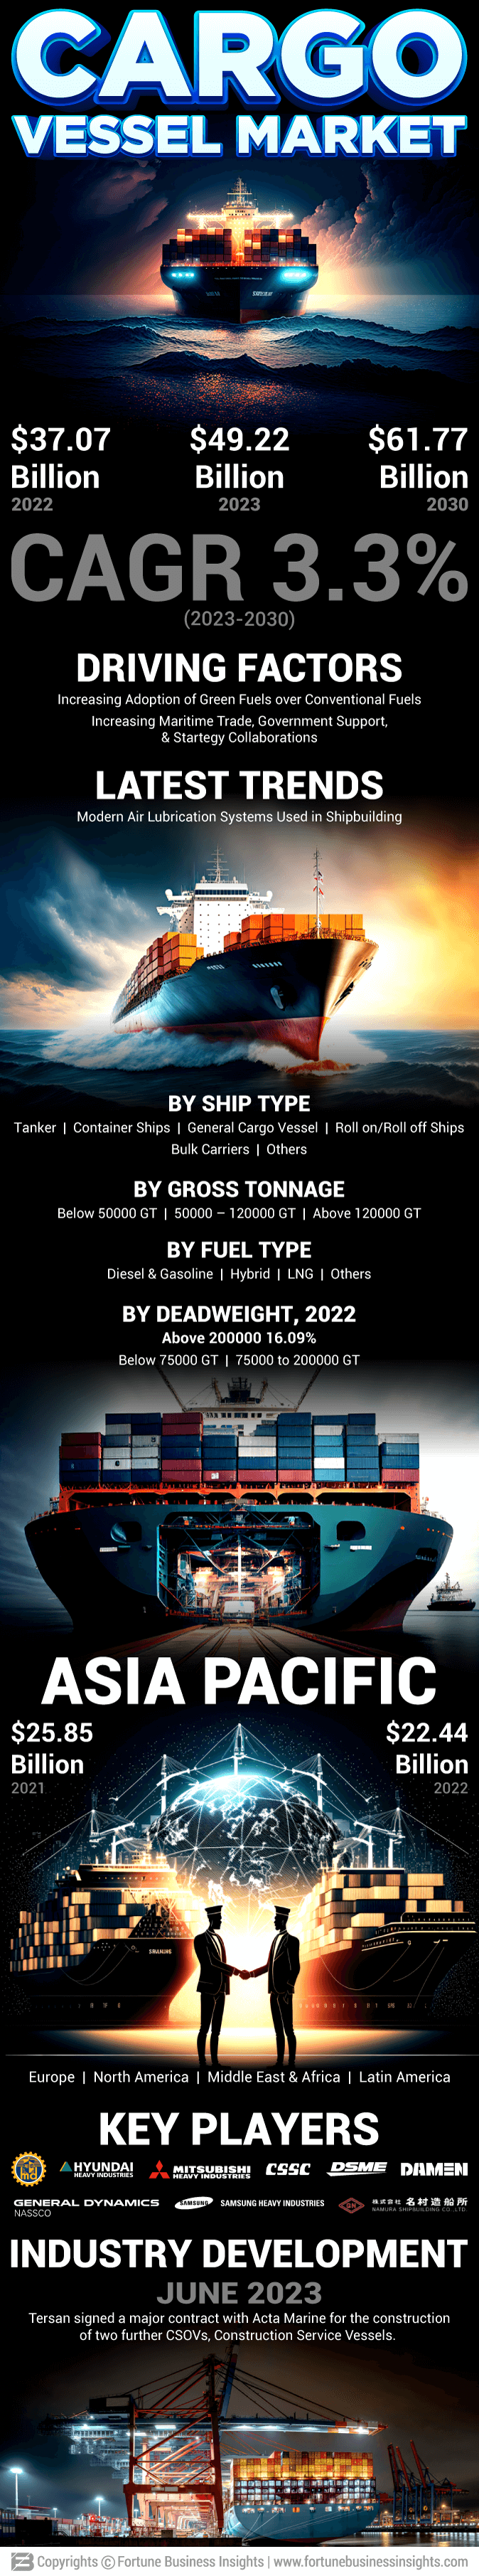 Cargo Vessel Market